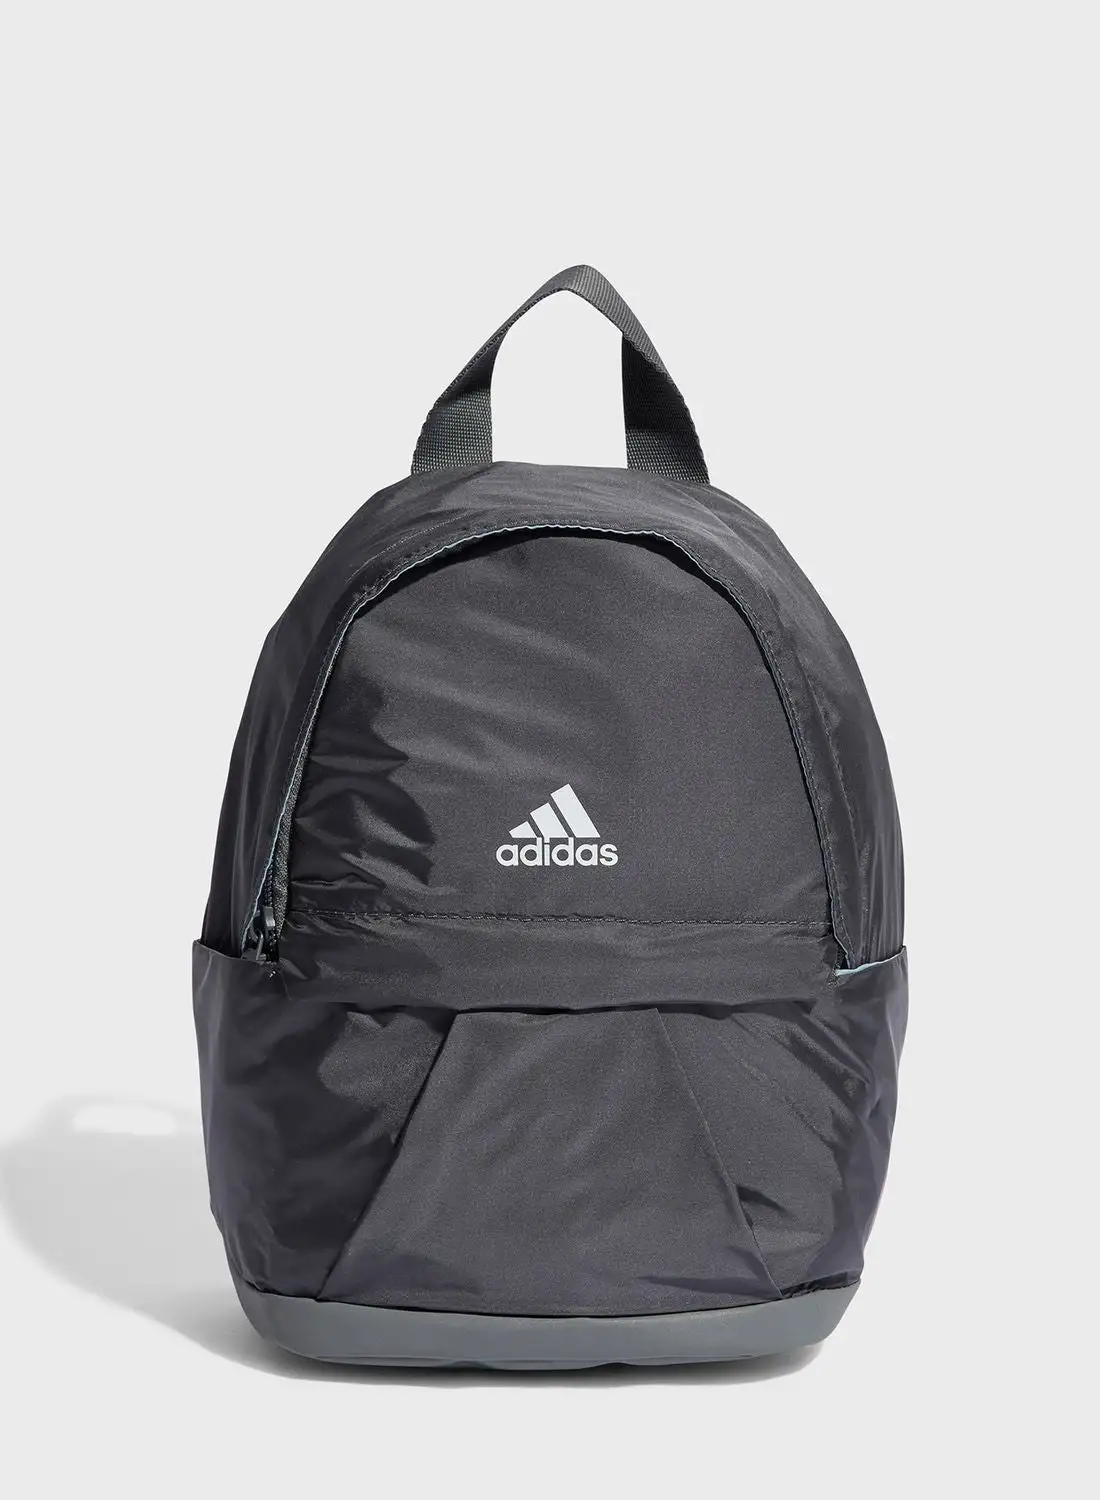 Adidas Glow Backpack